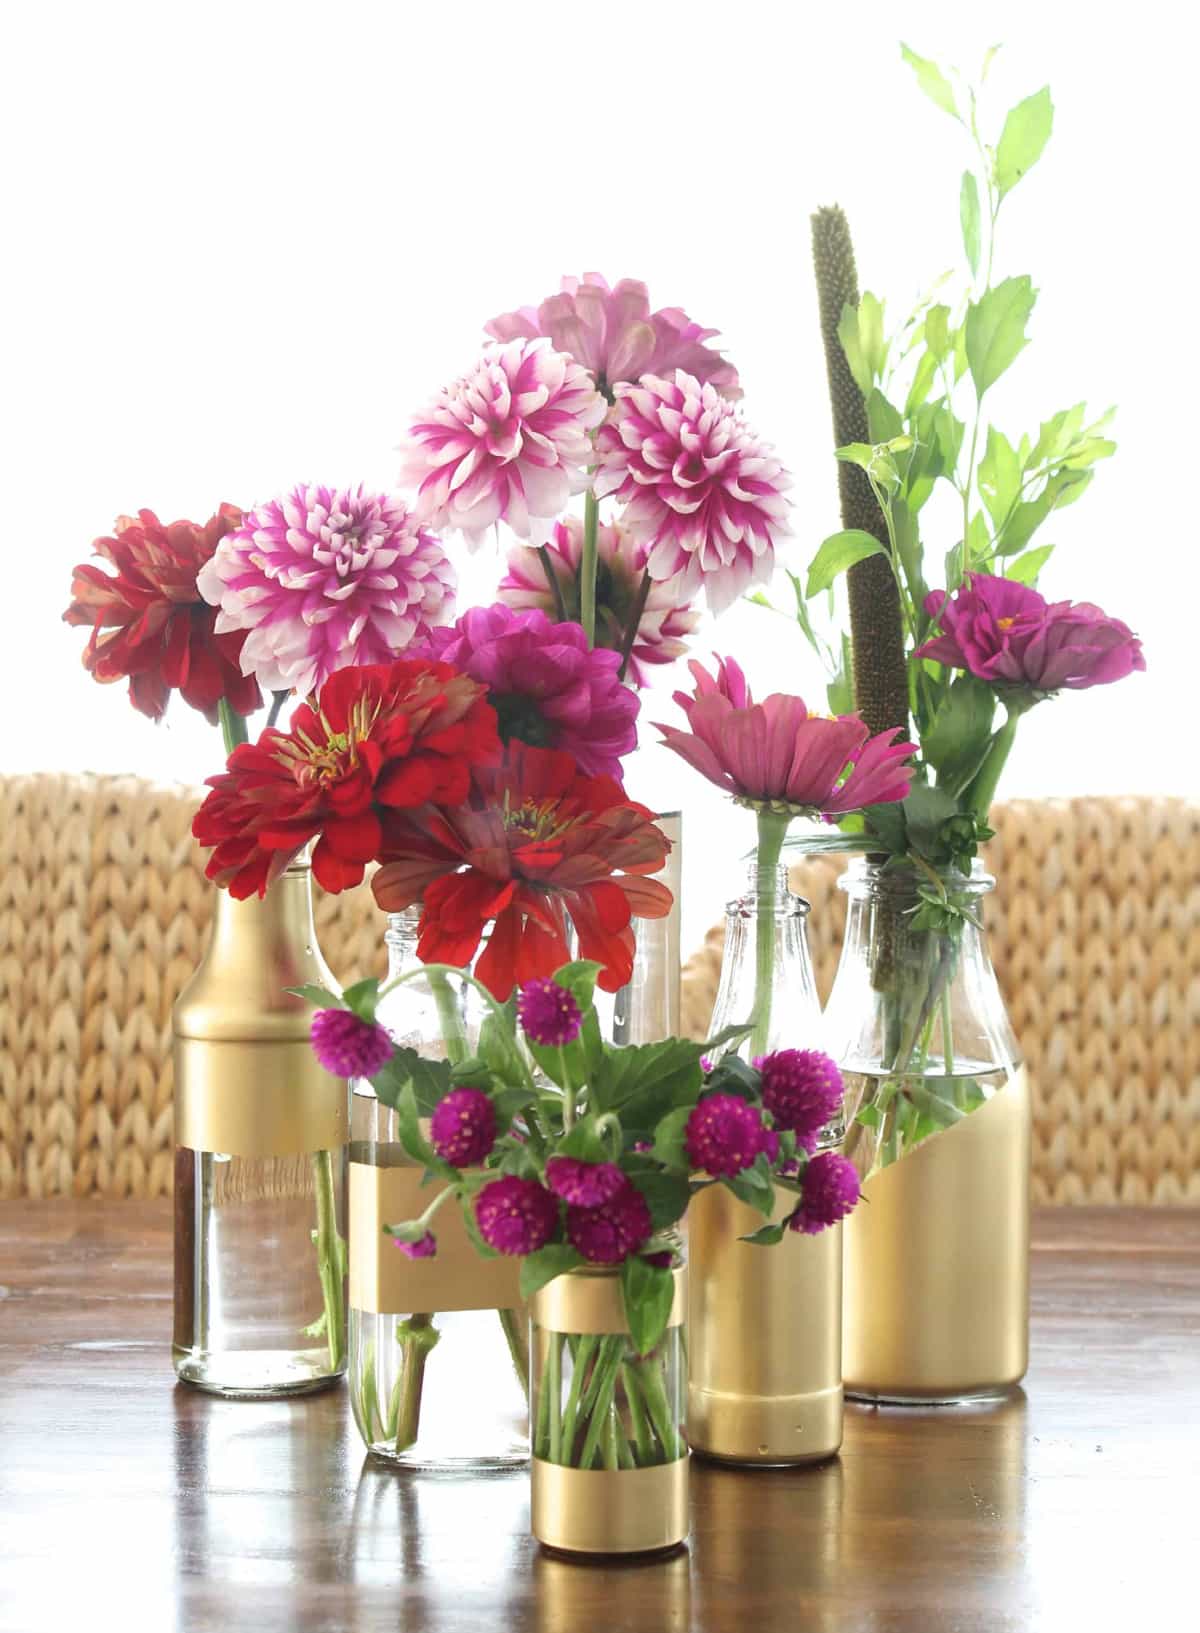 gilded vases from condiment bottles